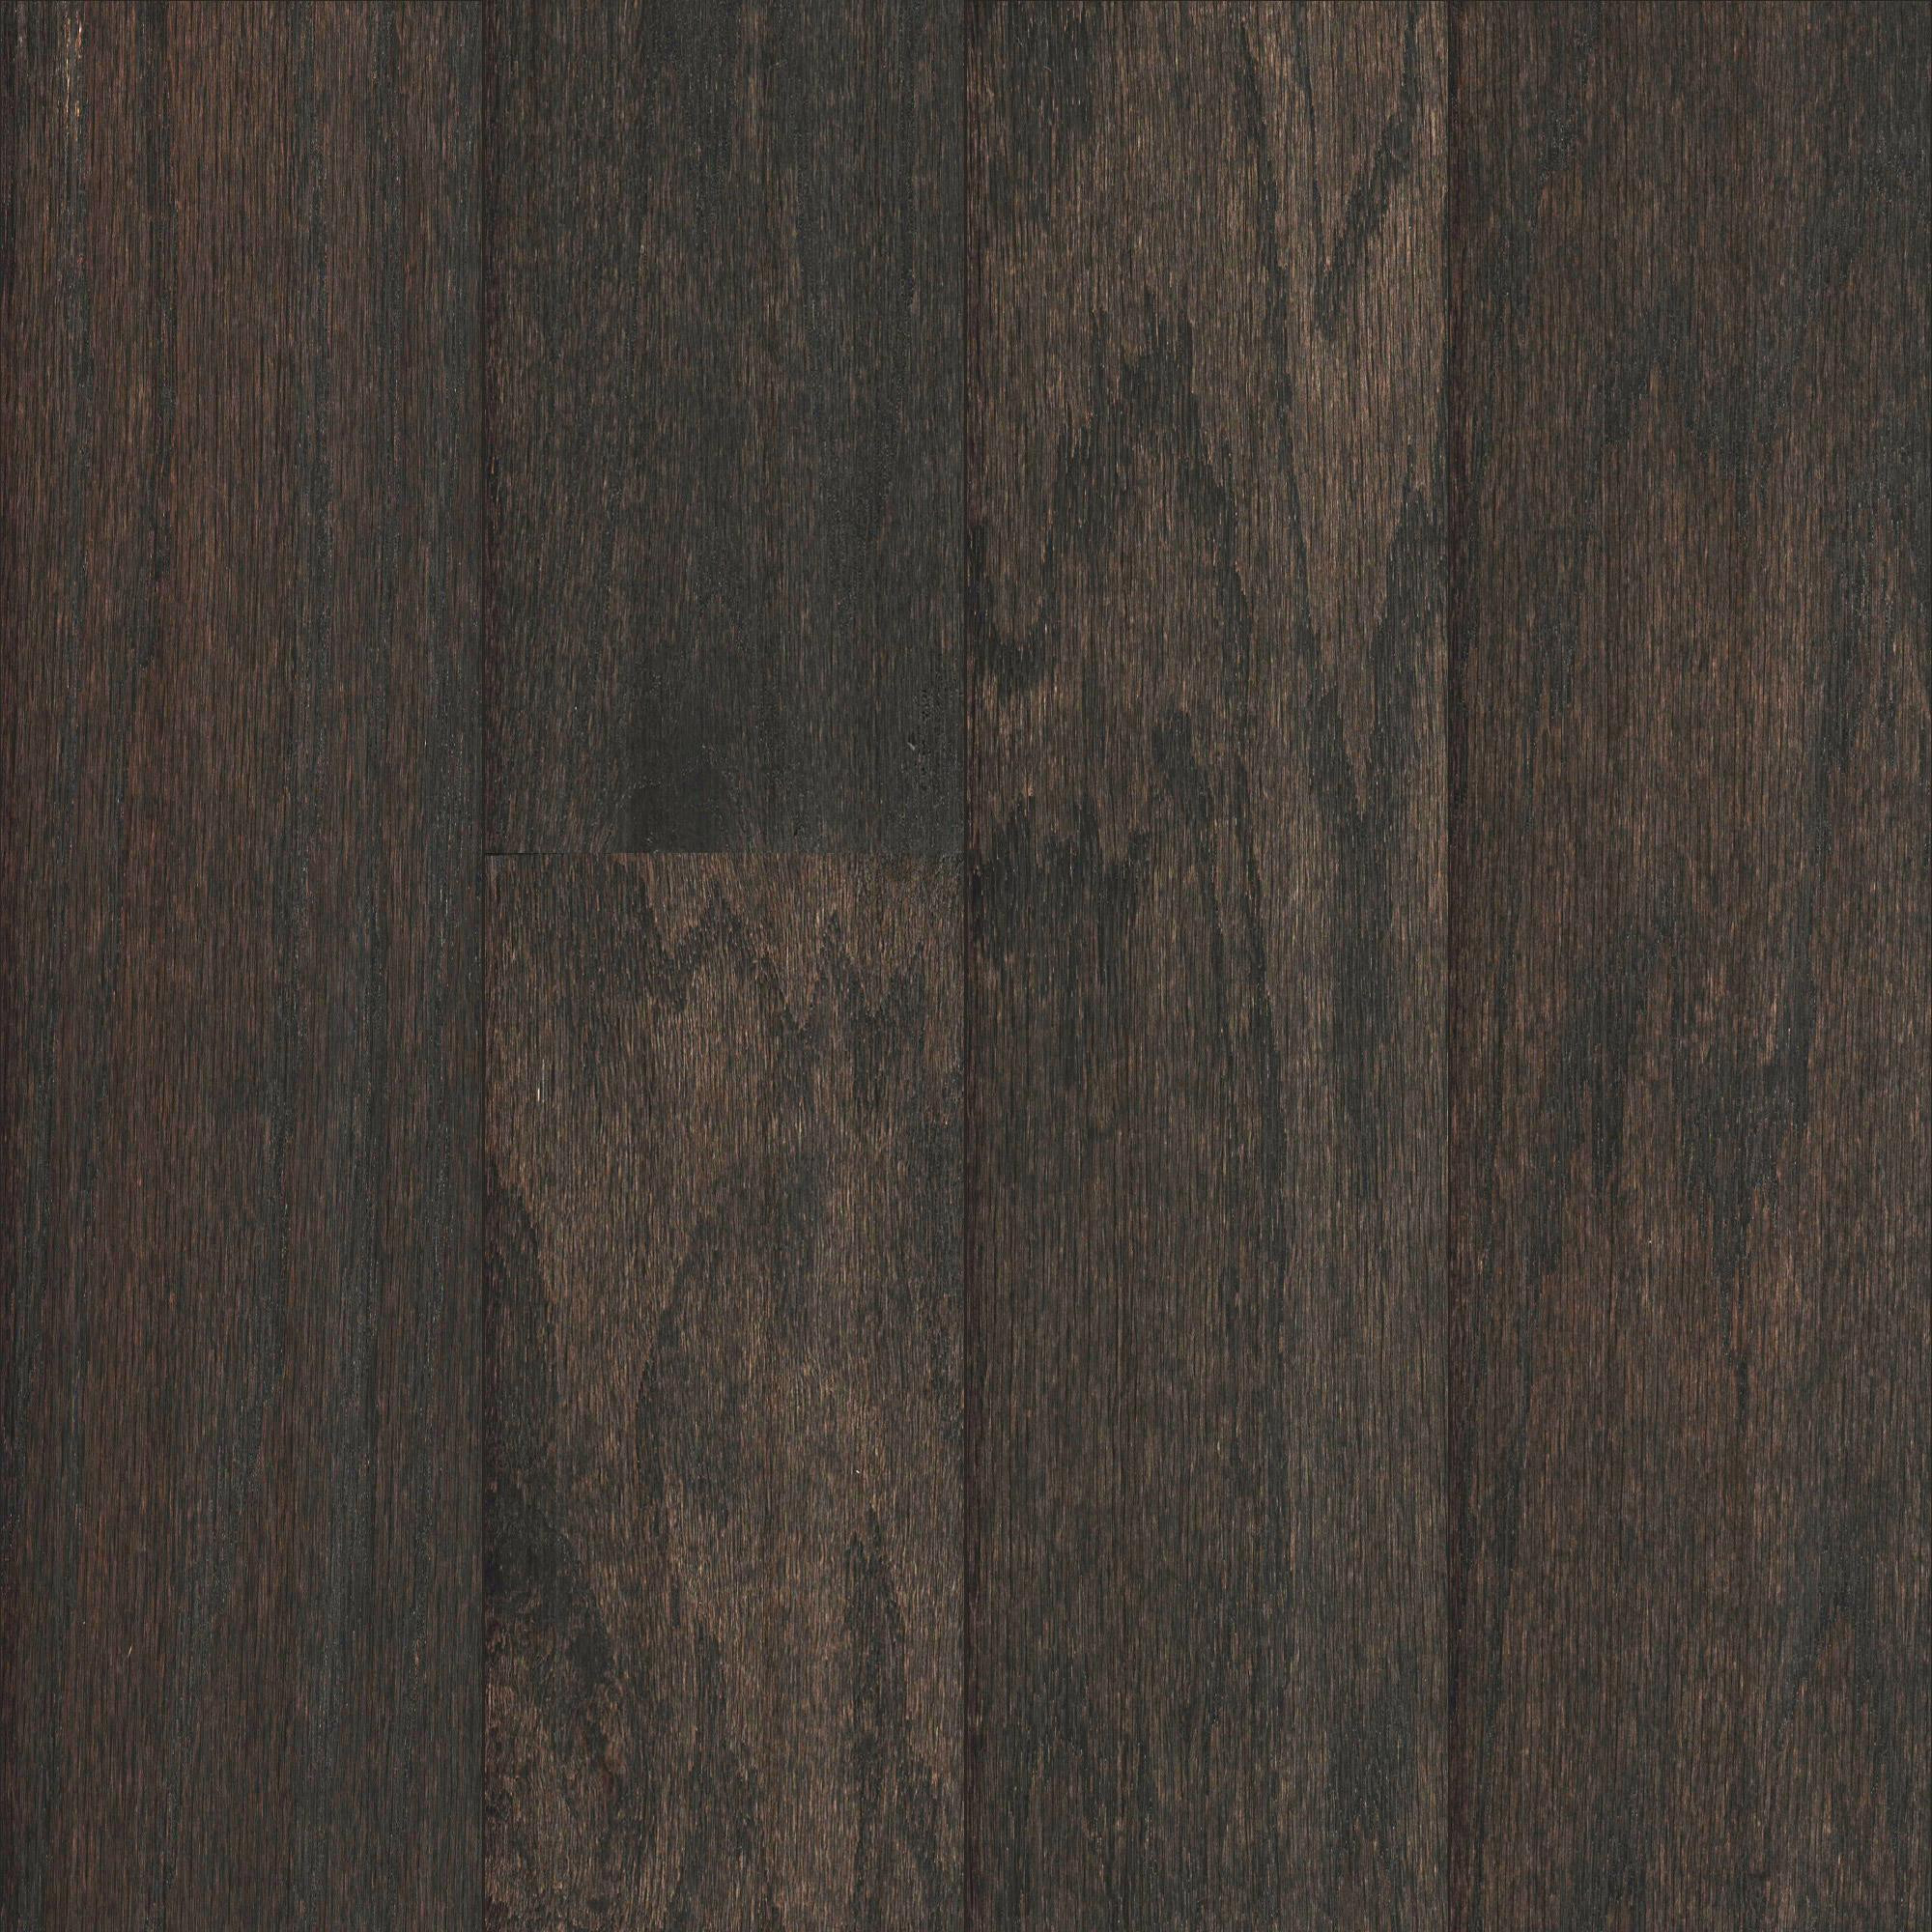 Bruce Hardwood Flooring butterscotch Color Of Mullican Newtown Plank Oak Granite 1 2 Thick 5 Wide Engineered with Regard to Mullican Newtown Plank Oak Granite 1 2 Thick 5 Wide Engineered Hardwood Flooring